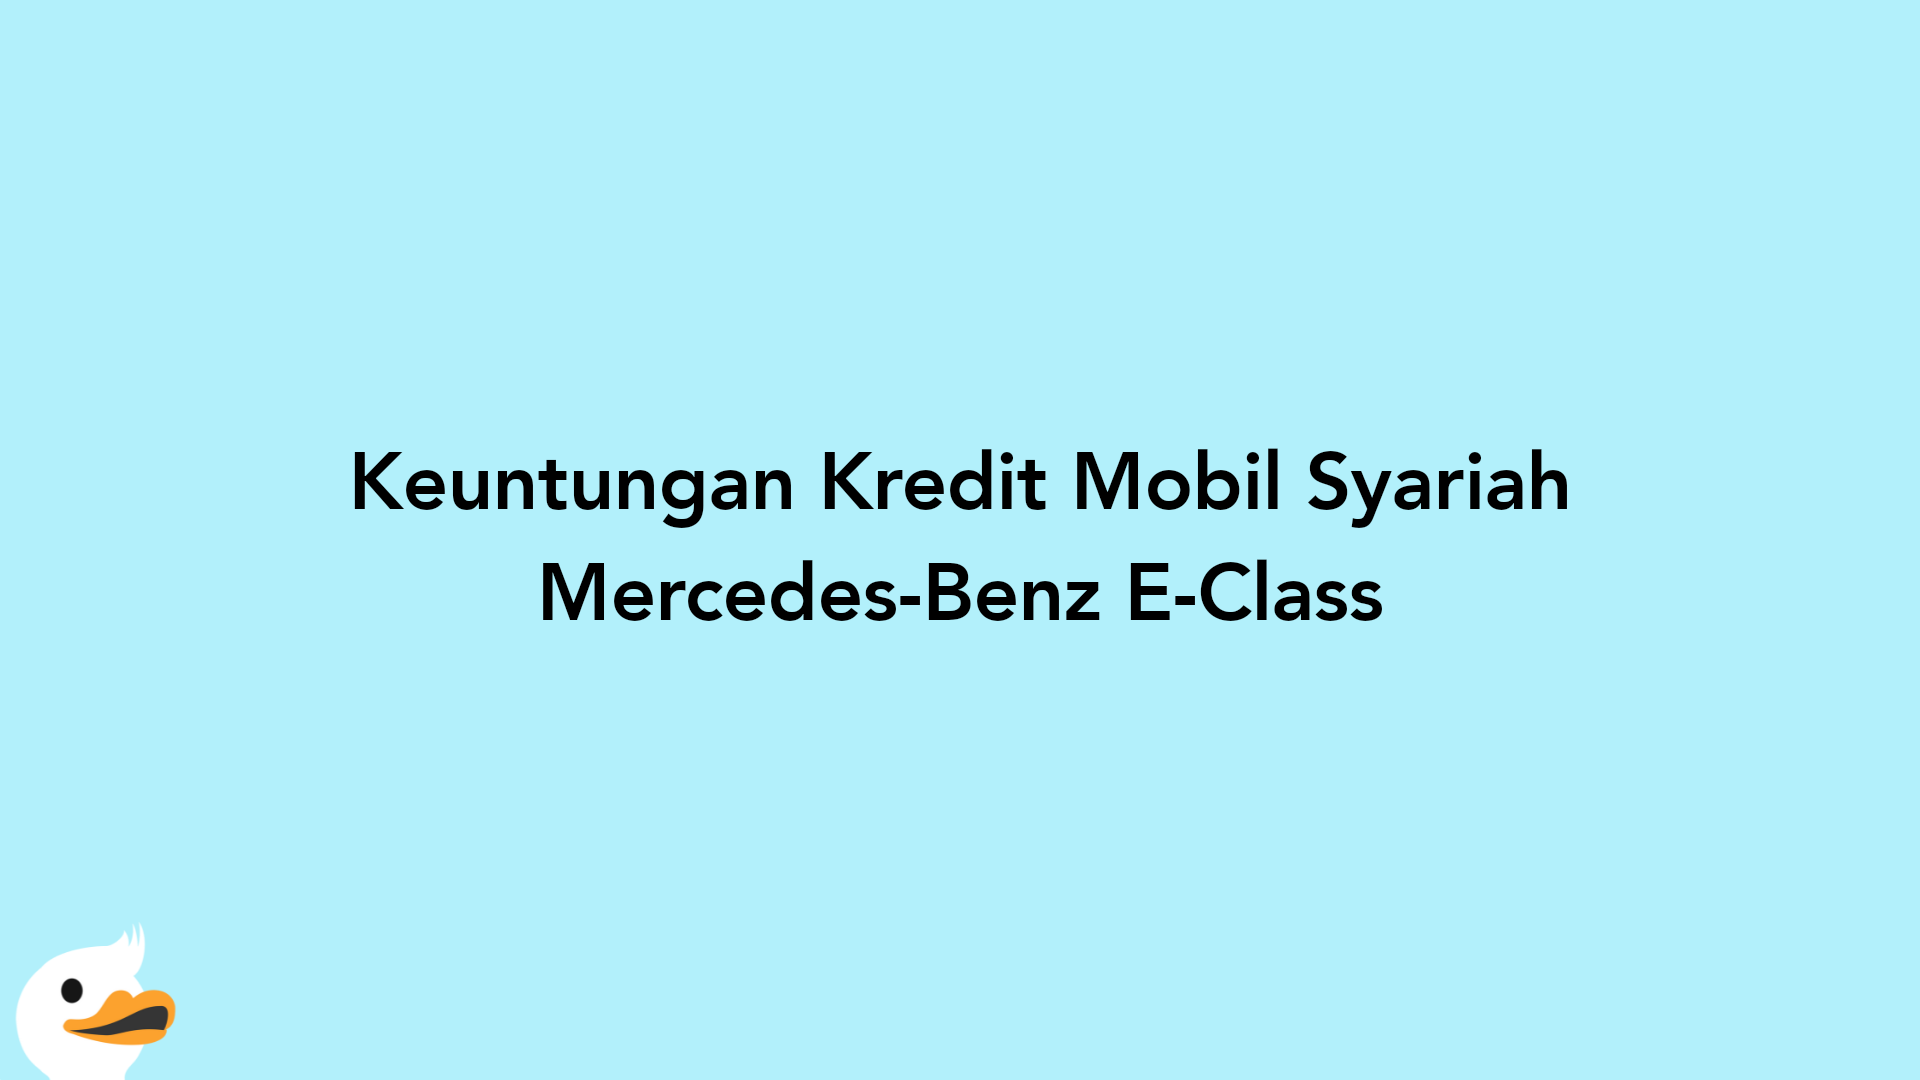 Keuntungan Kredit Mobil Syariah Mercedes-Benz E-Class